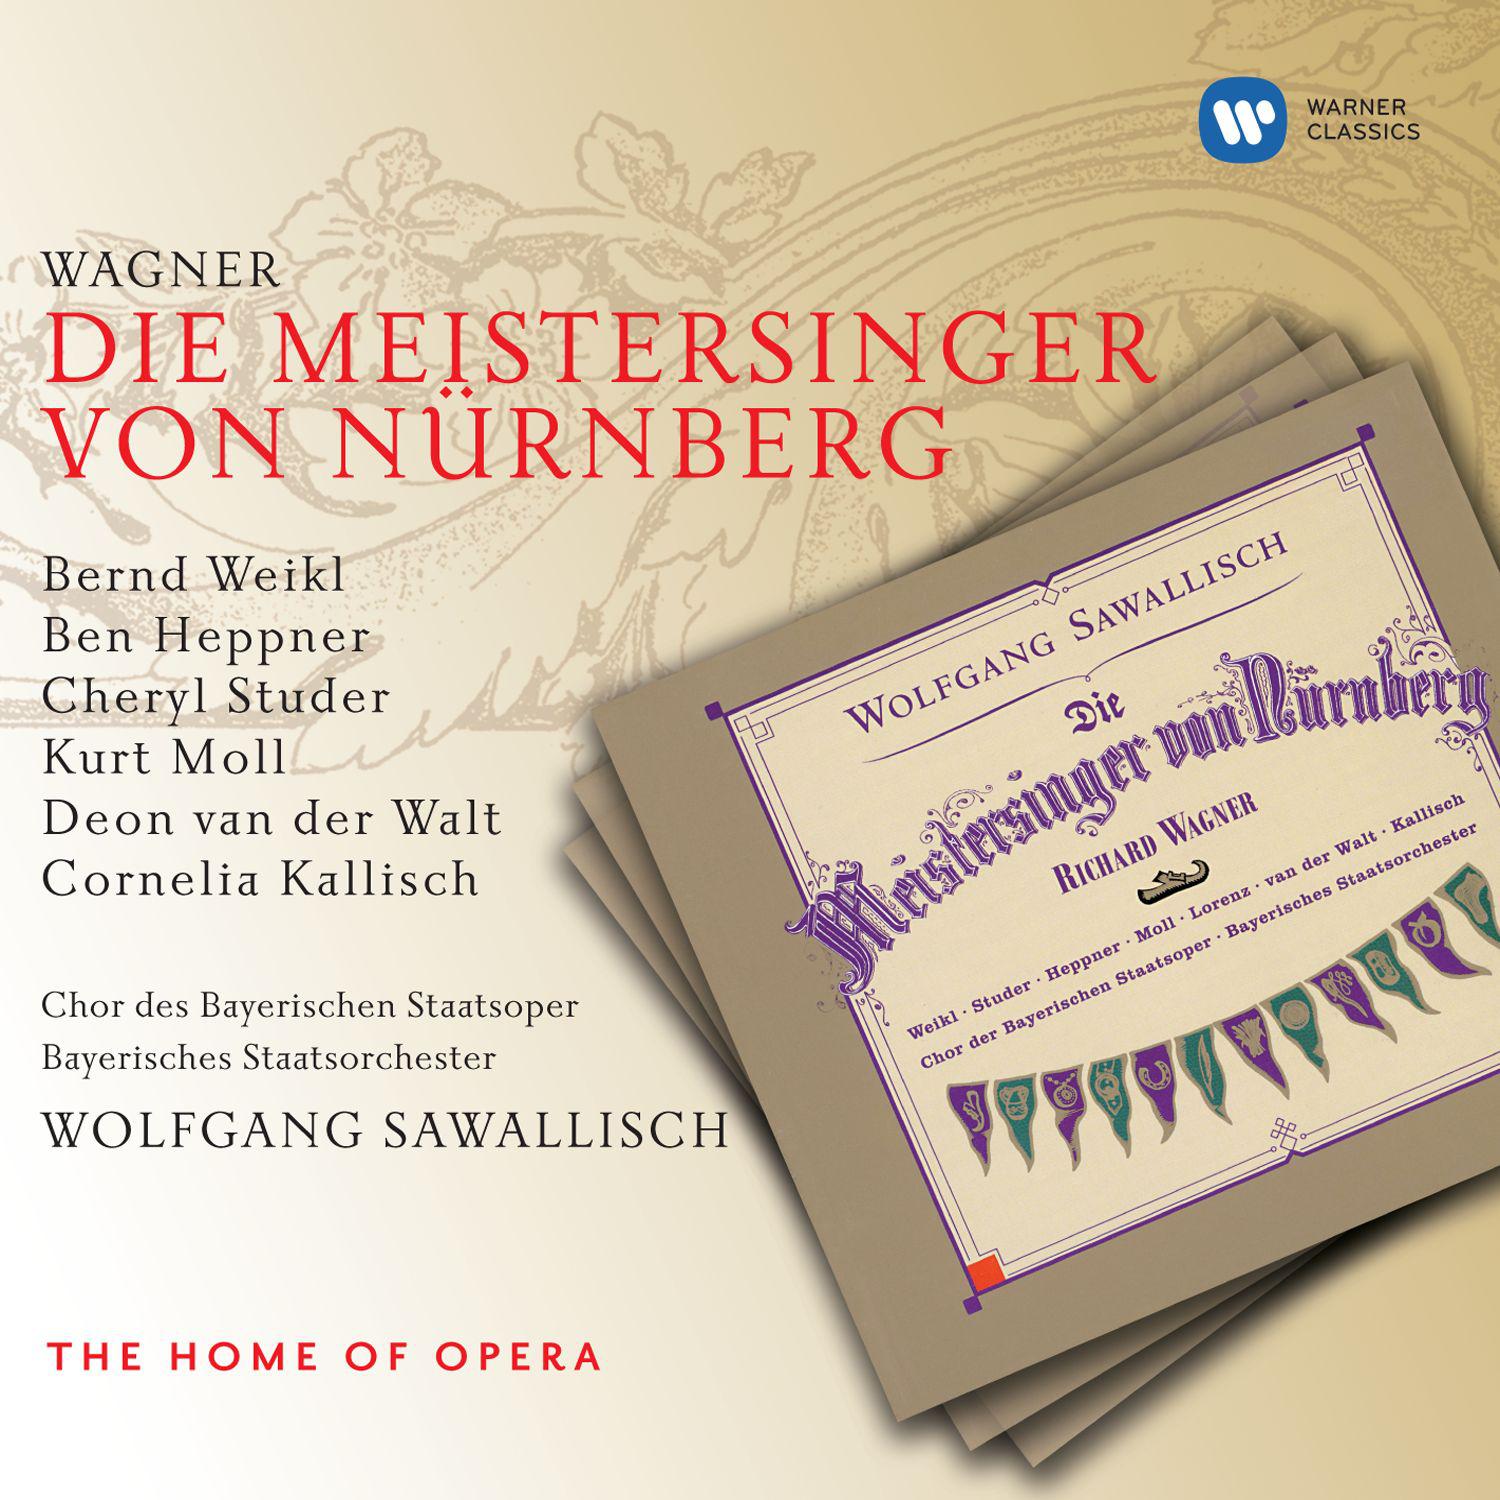 Die Meistersinger von Nürnberg, Act 2, Scene 1:Johannistag! Hohannistag!